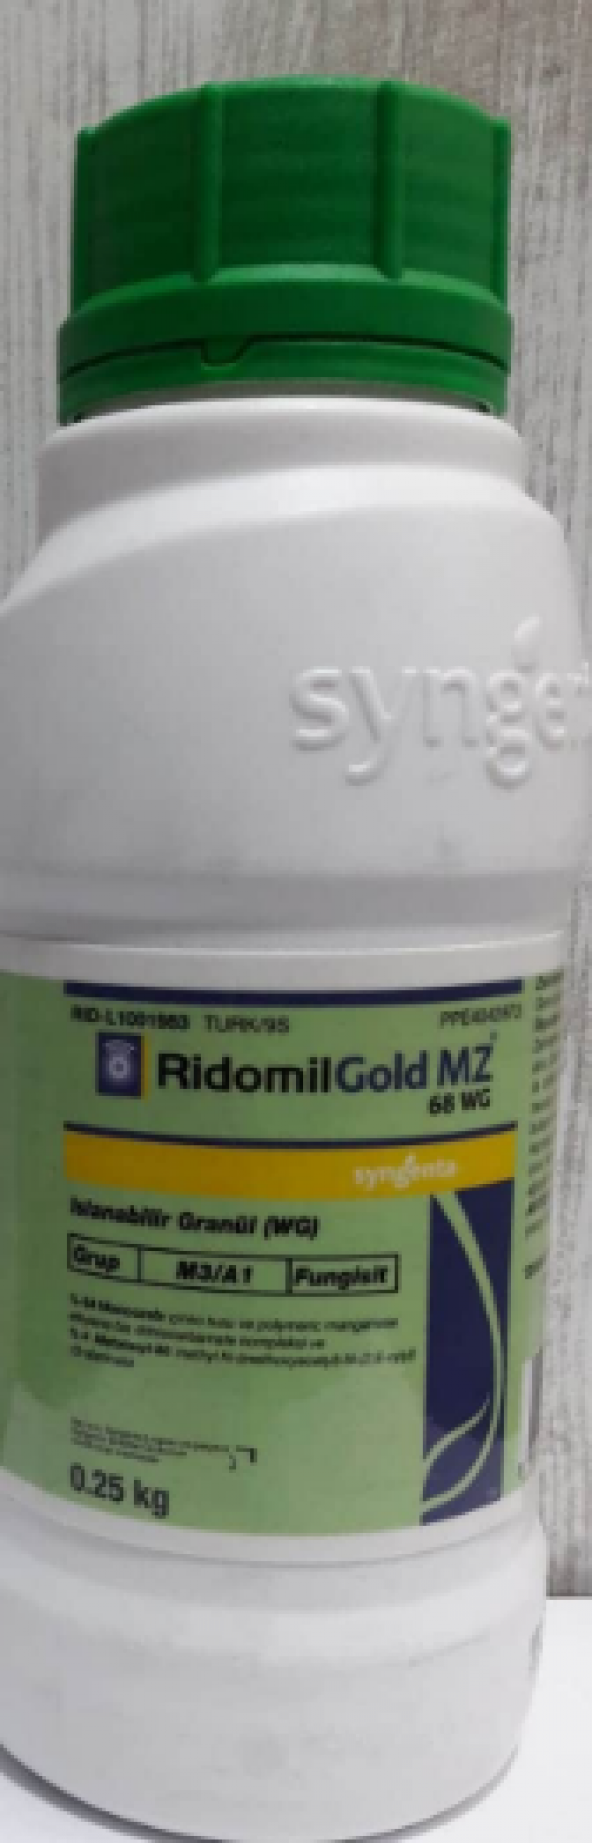 Ridomil Gold MZ 68 WG Mildiyö İlacı 250 gr